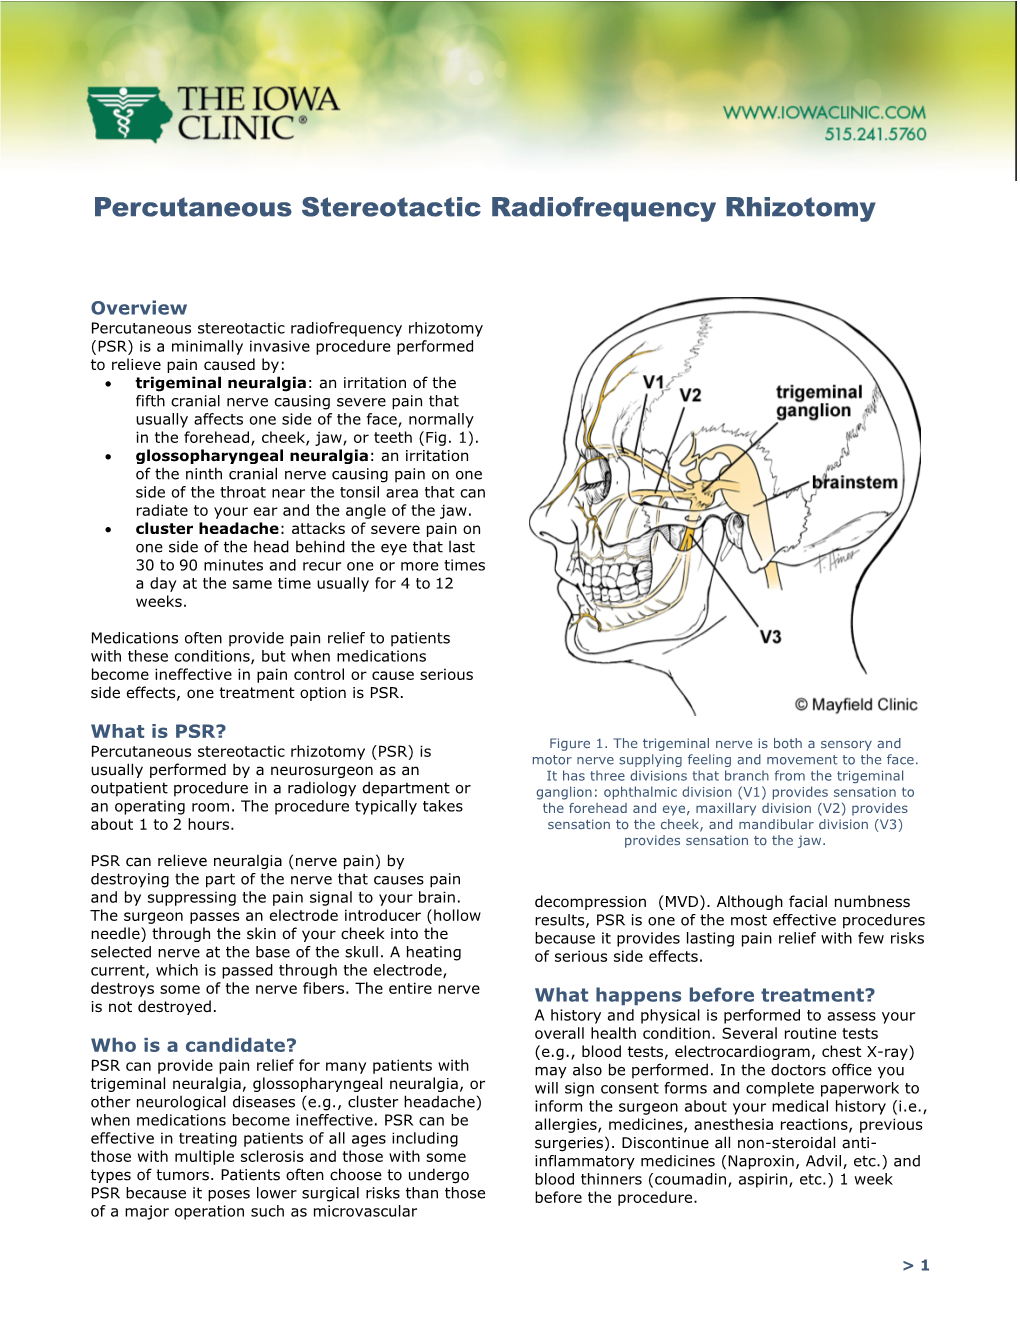 Percutaneous Stereotactic Radiofrequency Rhizotomy (PSR)